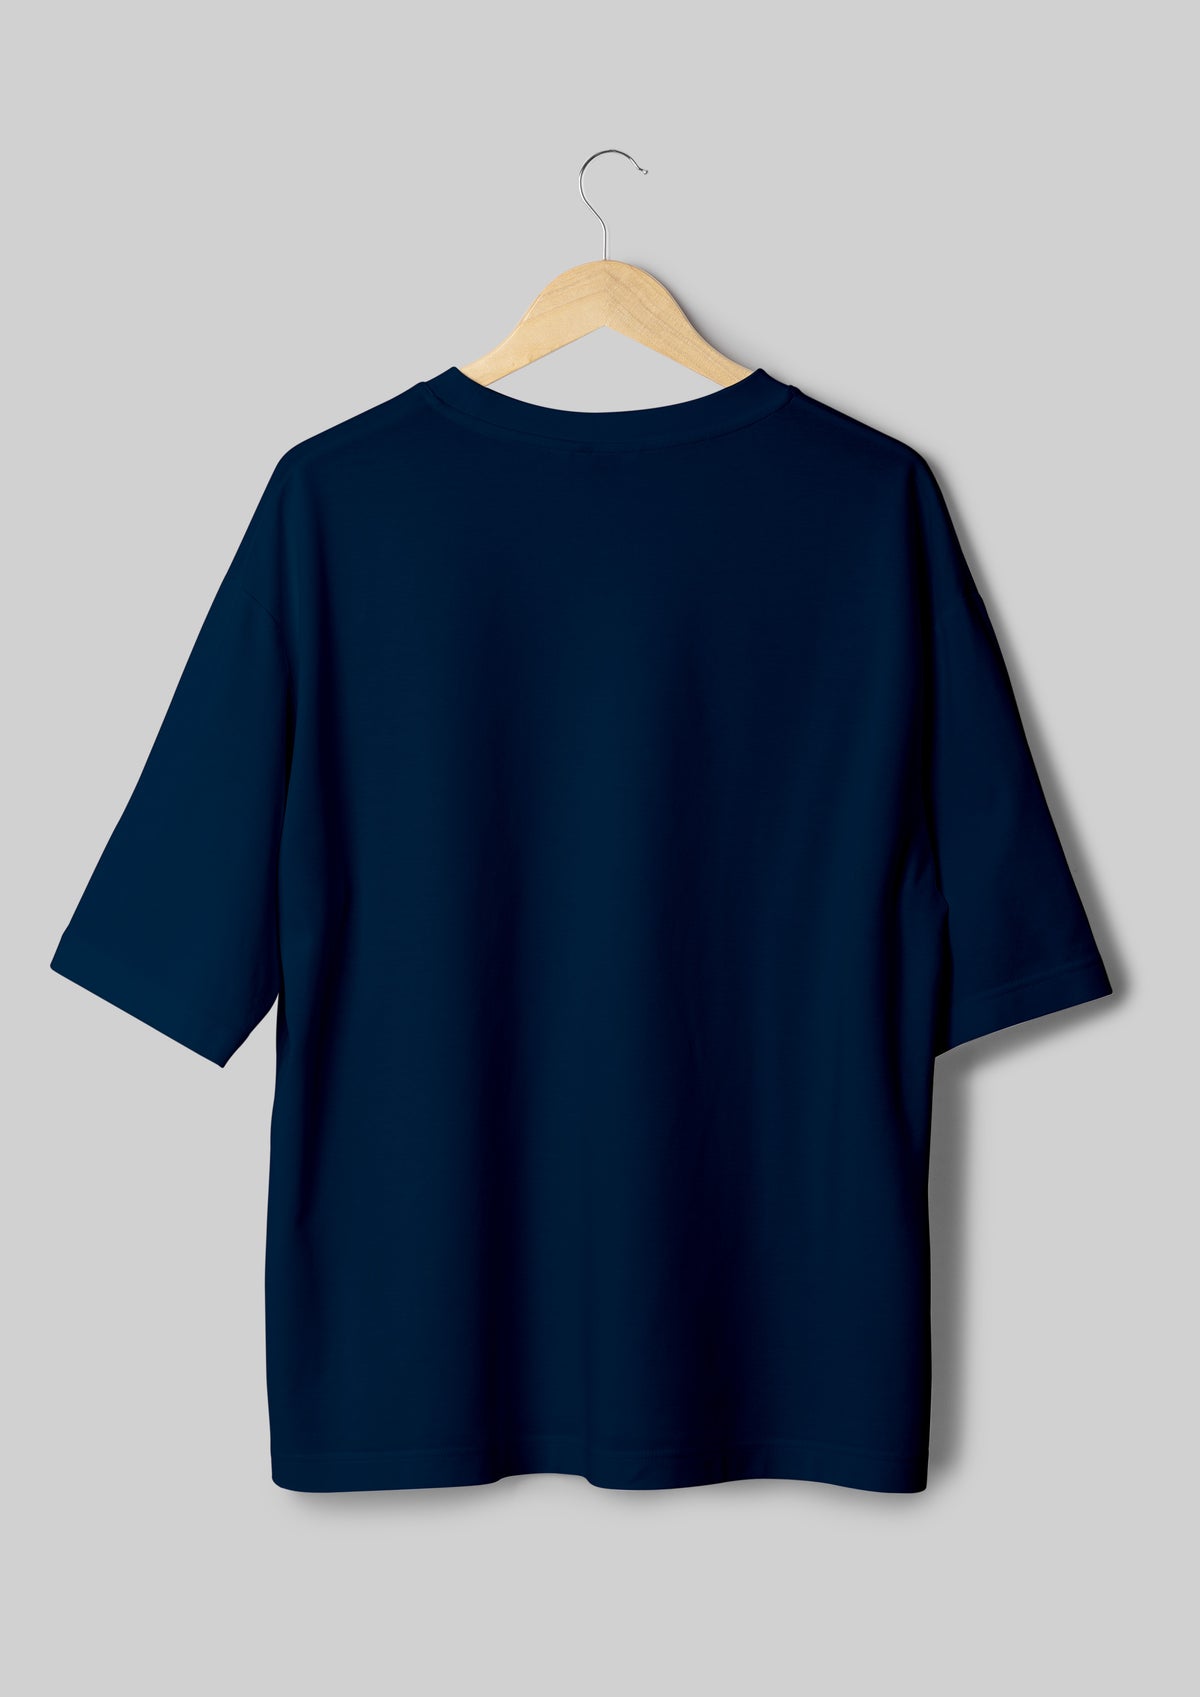 Plain Navy Blue Unisex Oversized T-shirt